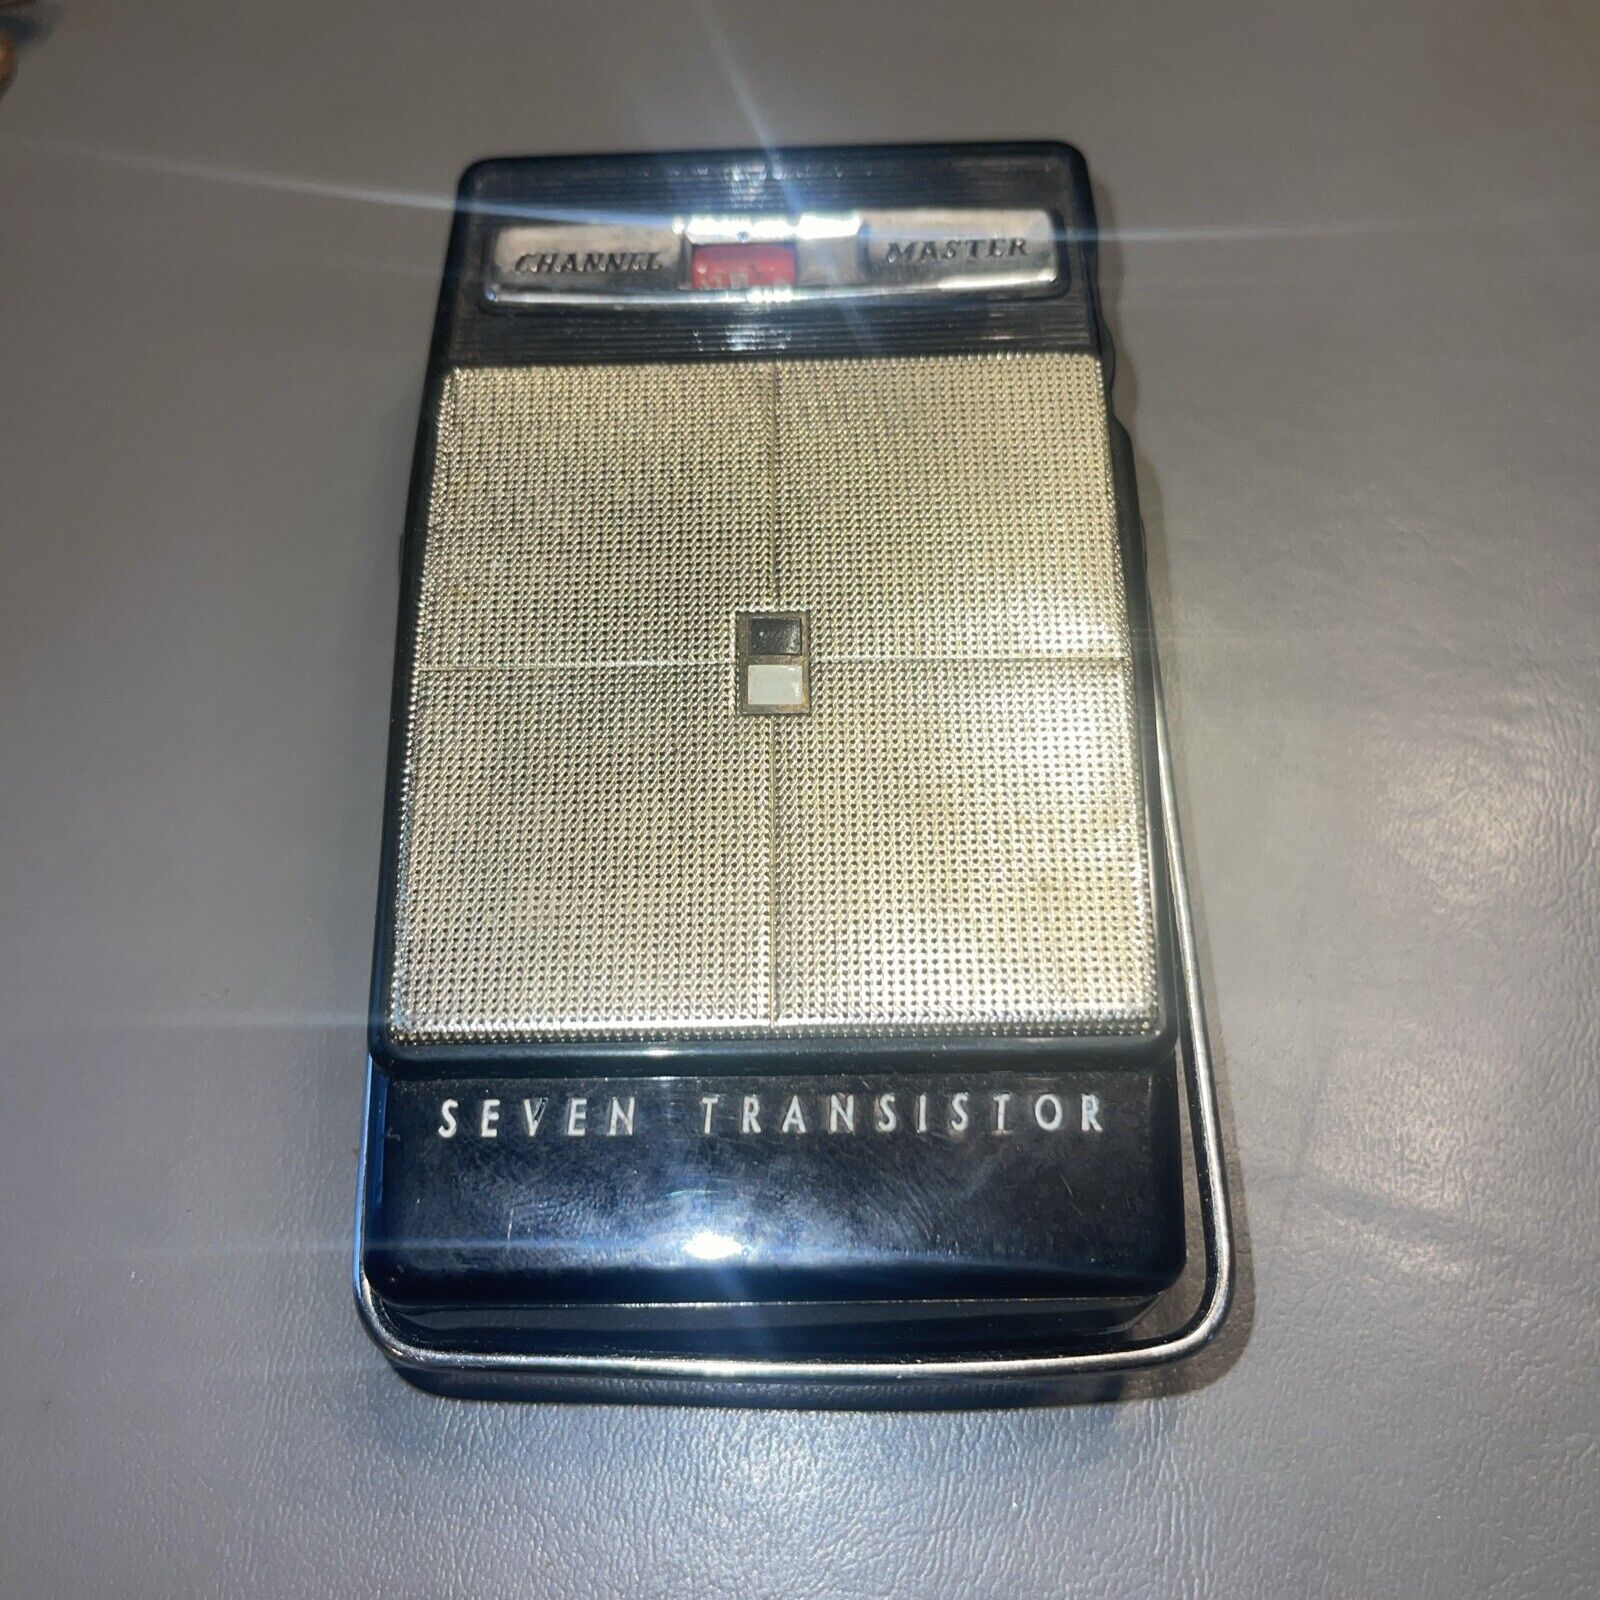 Channel Master Model 6509 Pocket Radio 6 Transistor AM - 1960